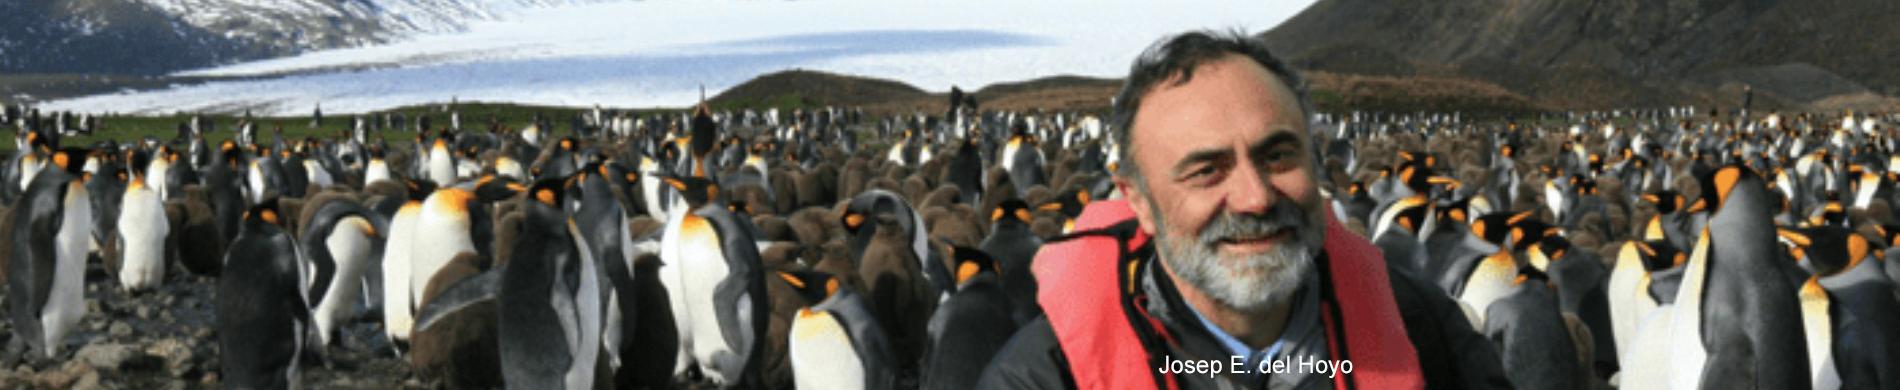 Koningspinguïns op Antarctica met Josep del Hoyo